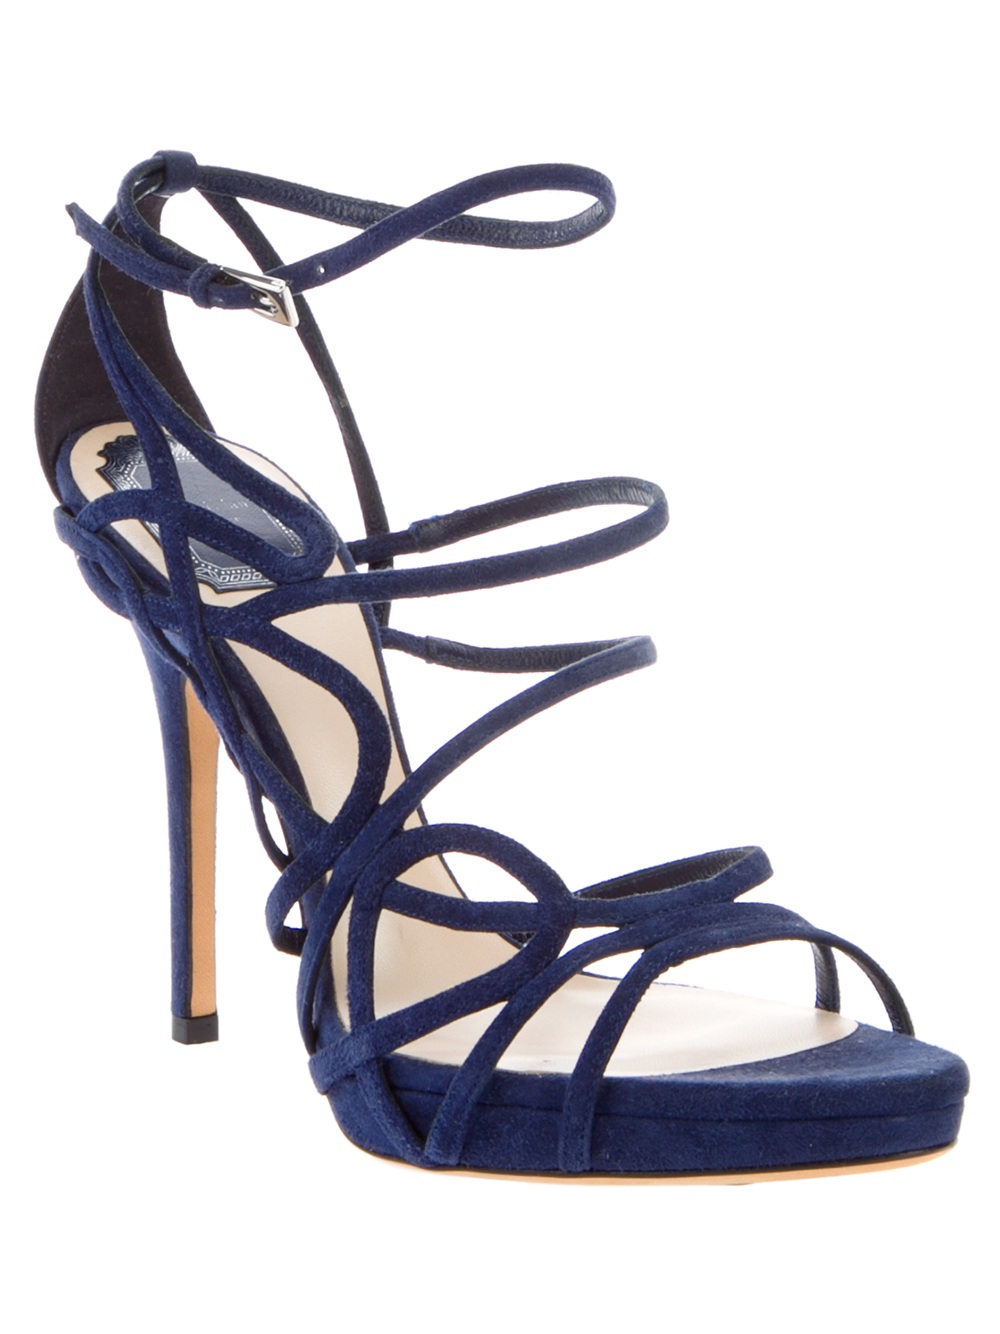 navy blue strappy high heels shop 903ab 